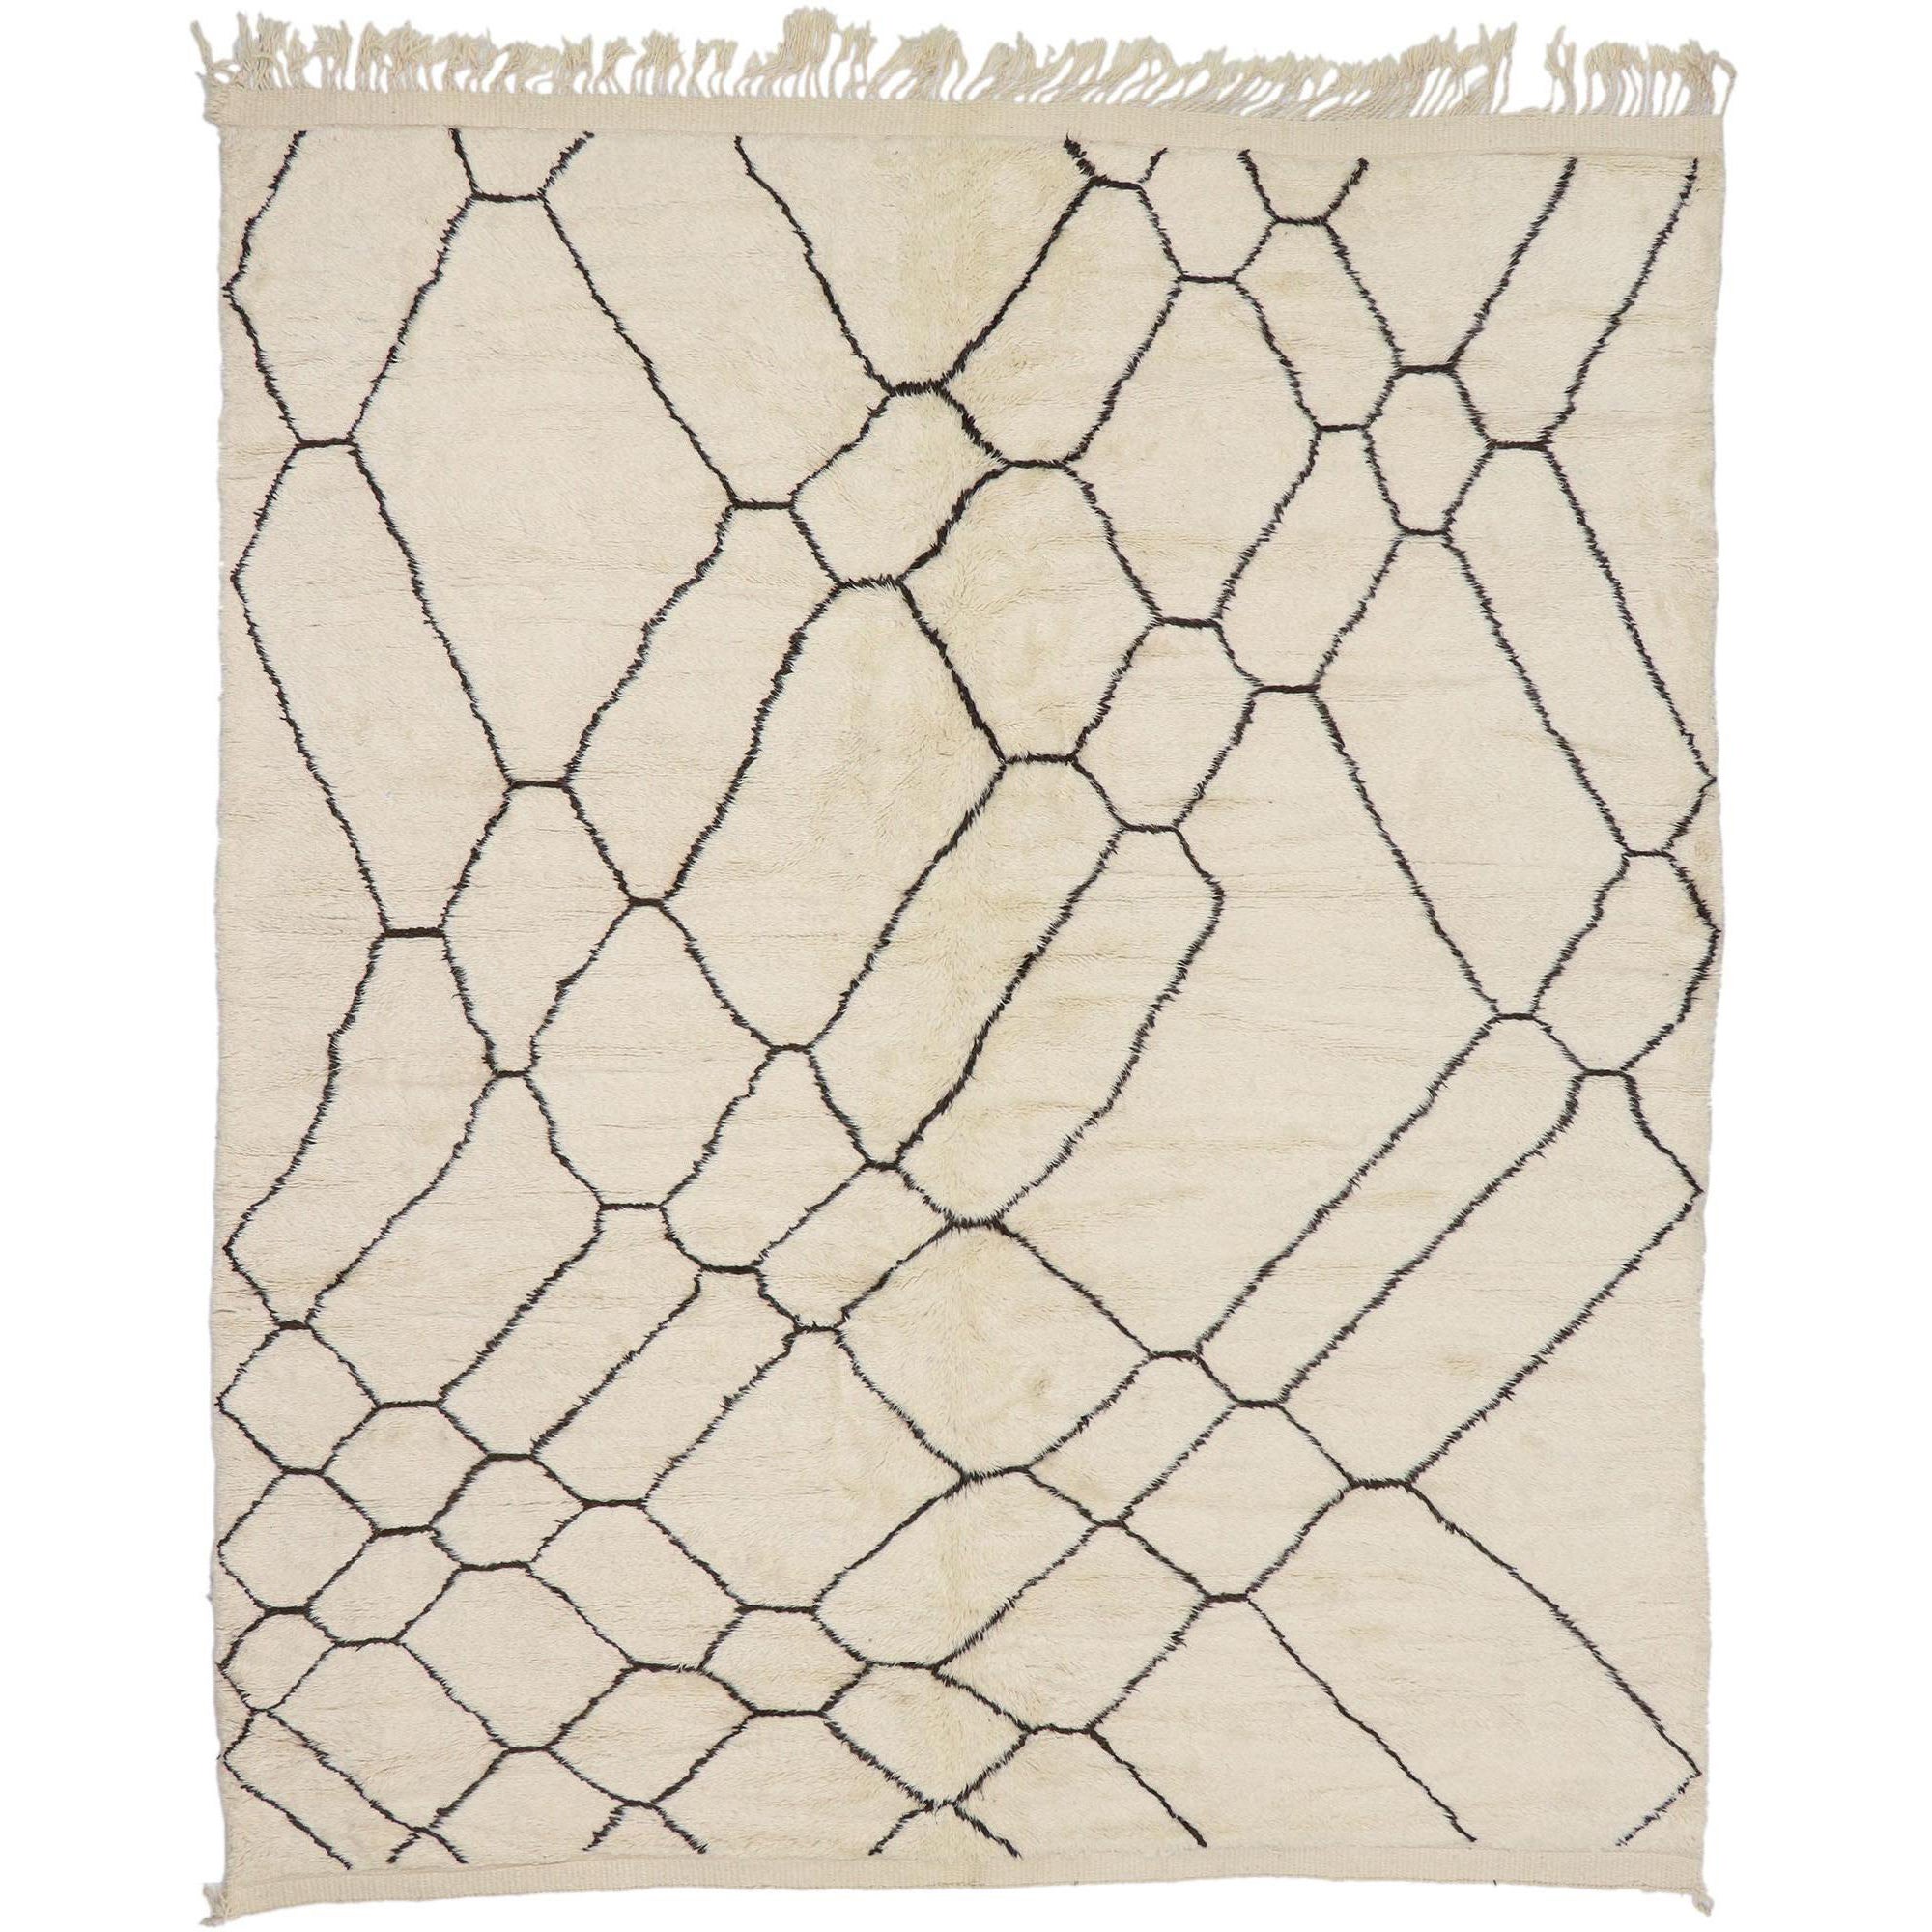 Nouveau tapis berbère marocain contemporain de style minimaliste en vente